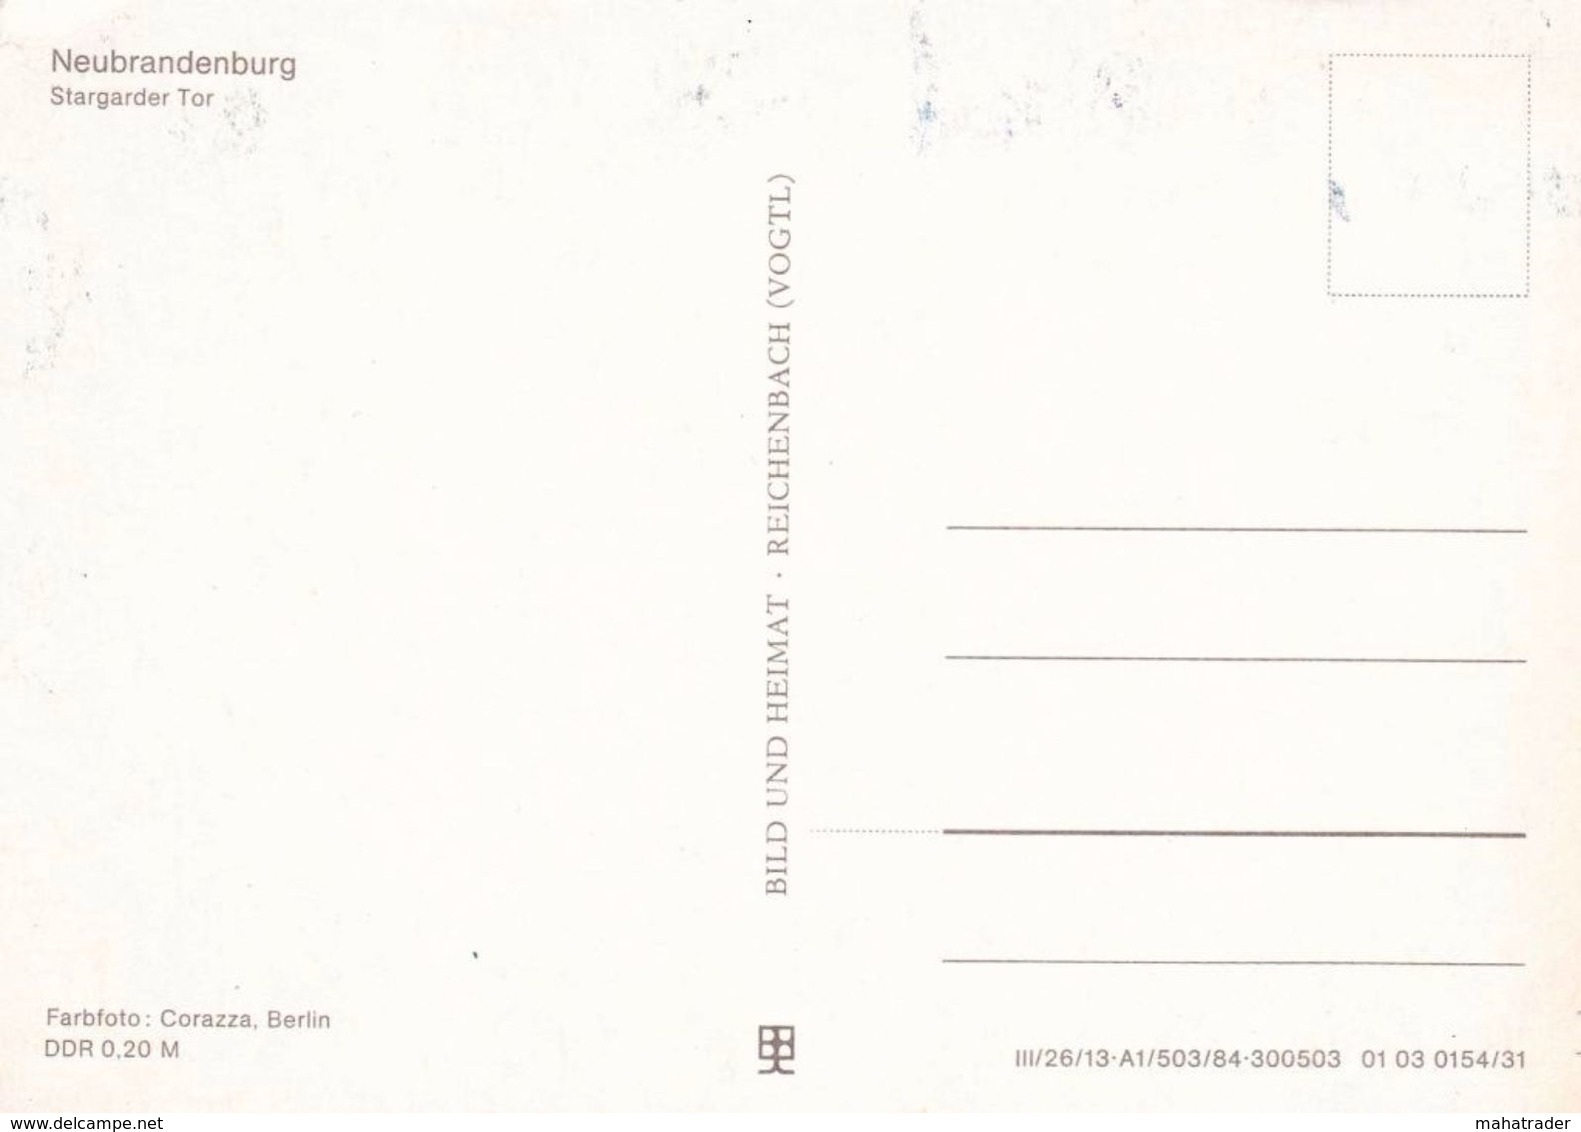 Germany - Neubrandenburg - Stargarder Tor Gate - Printed 1984 - Neubrandenburg